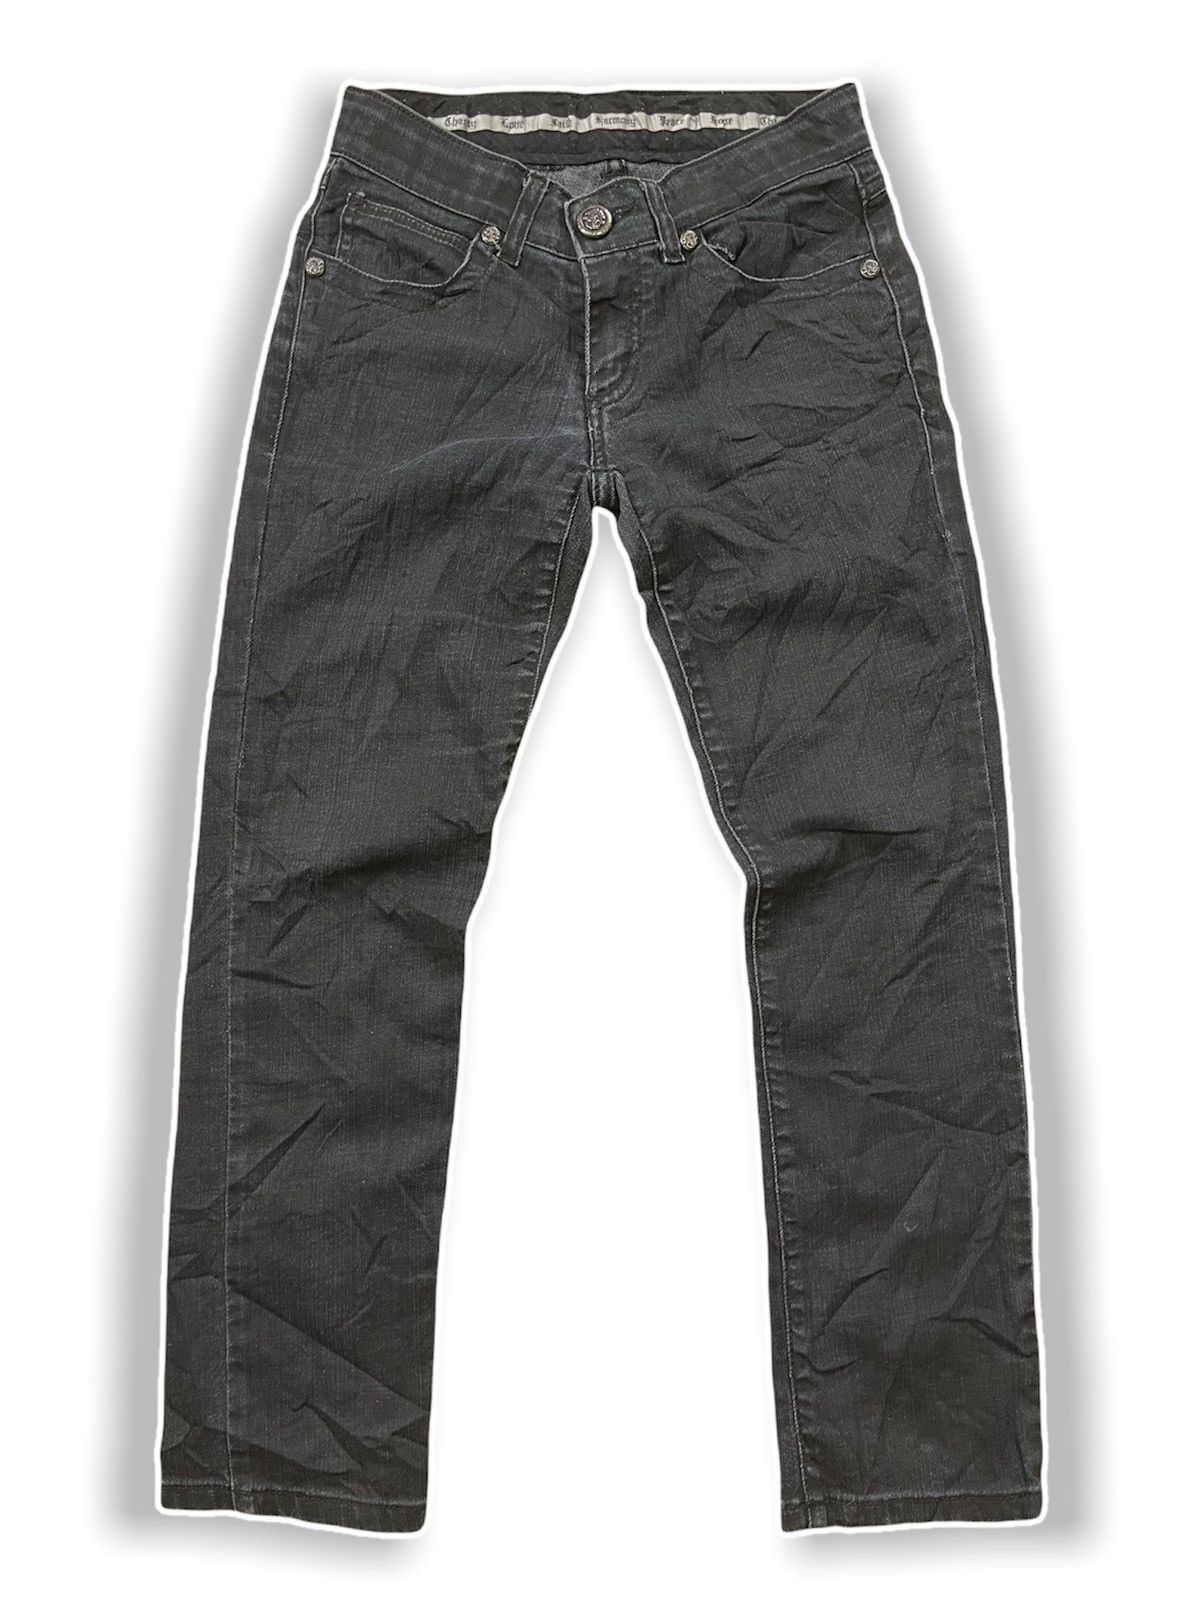 Archival Clothing - Faith Connexion Black Denim Jeans Made In Japan - 2